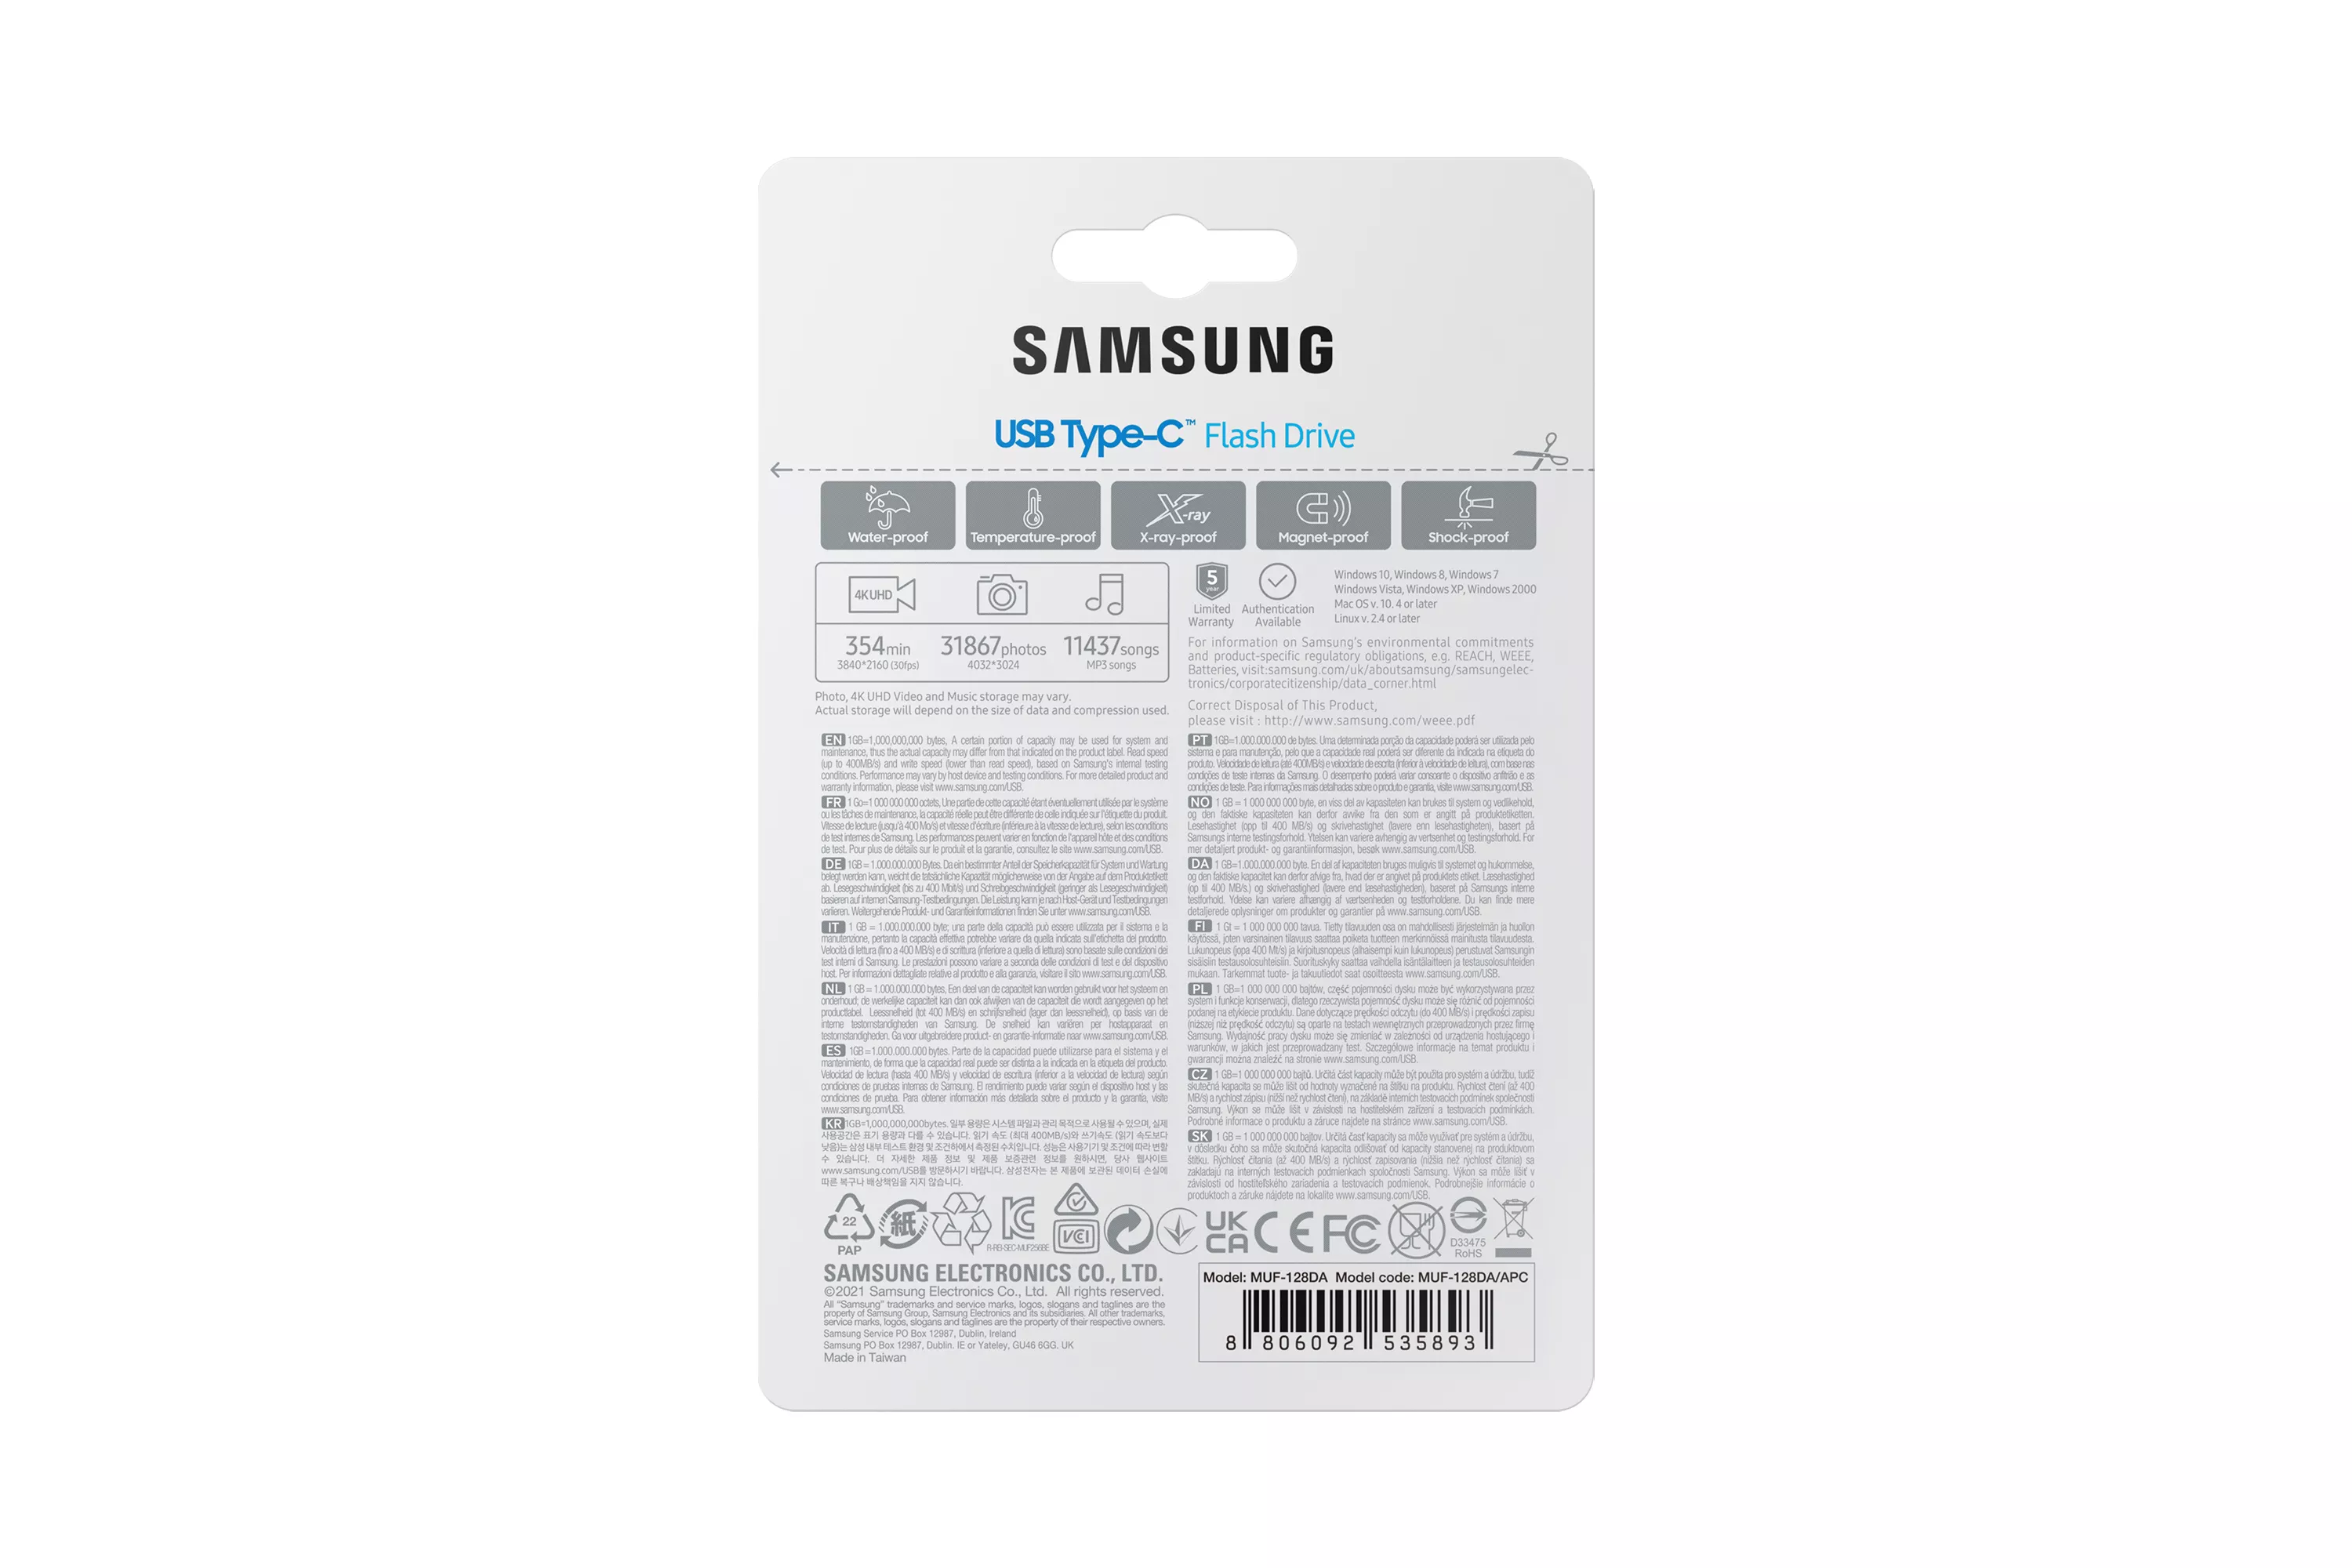 Vente SAMSUNG USB Type-C 128Go 400Mo/s USB 3.1 Flash Samsung au meilleur prix - visuel 10